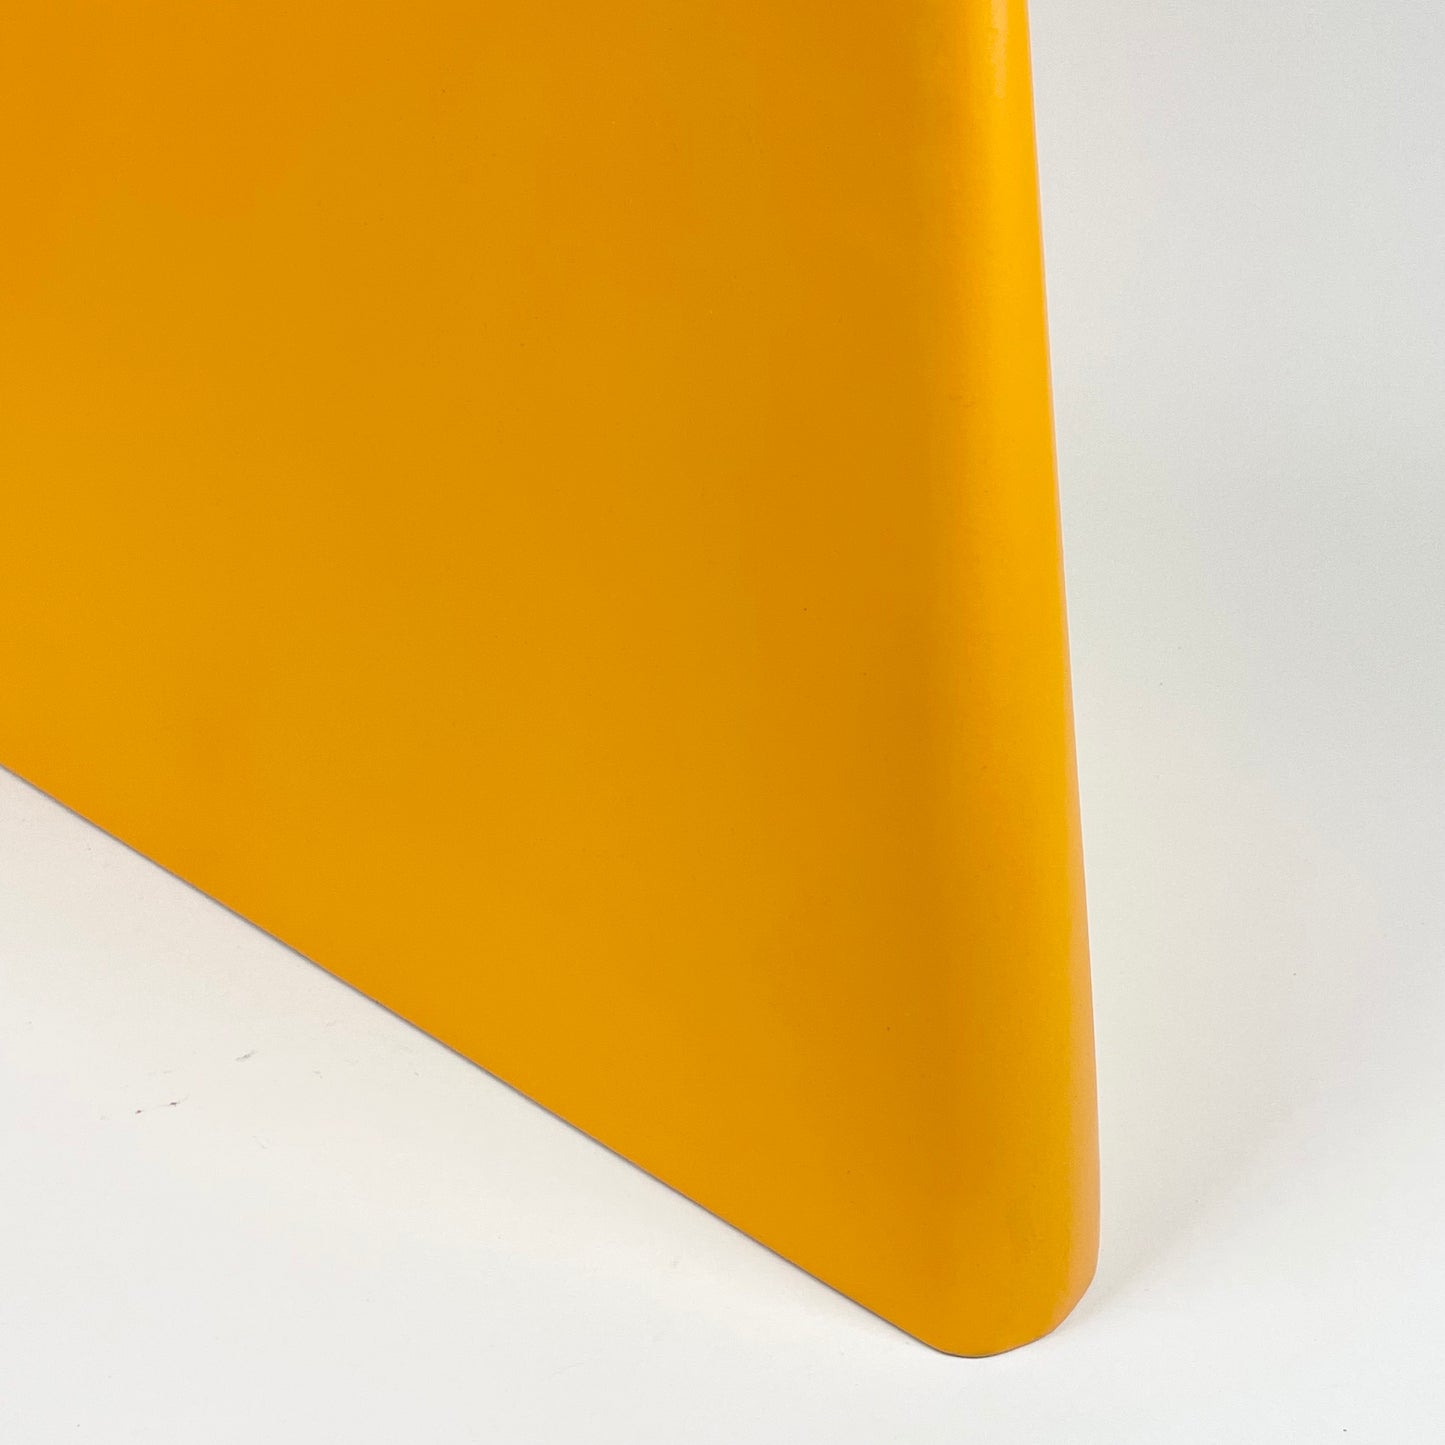 "Mango" stool/side table by Alexander Morén